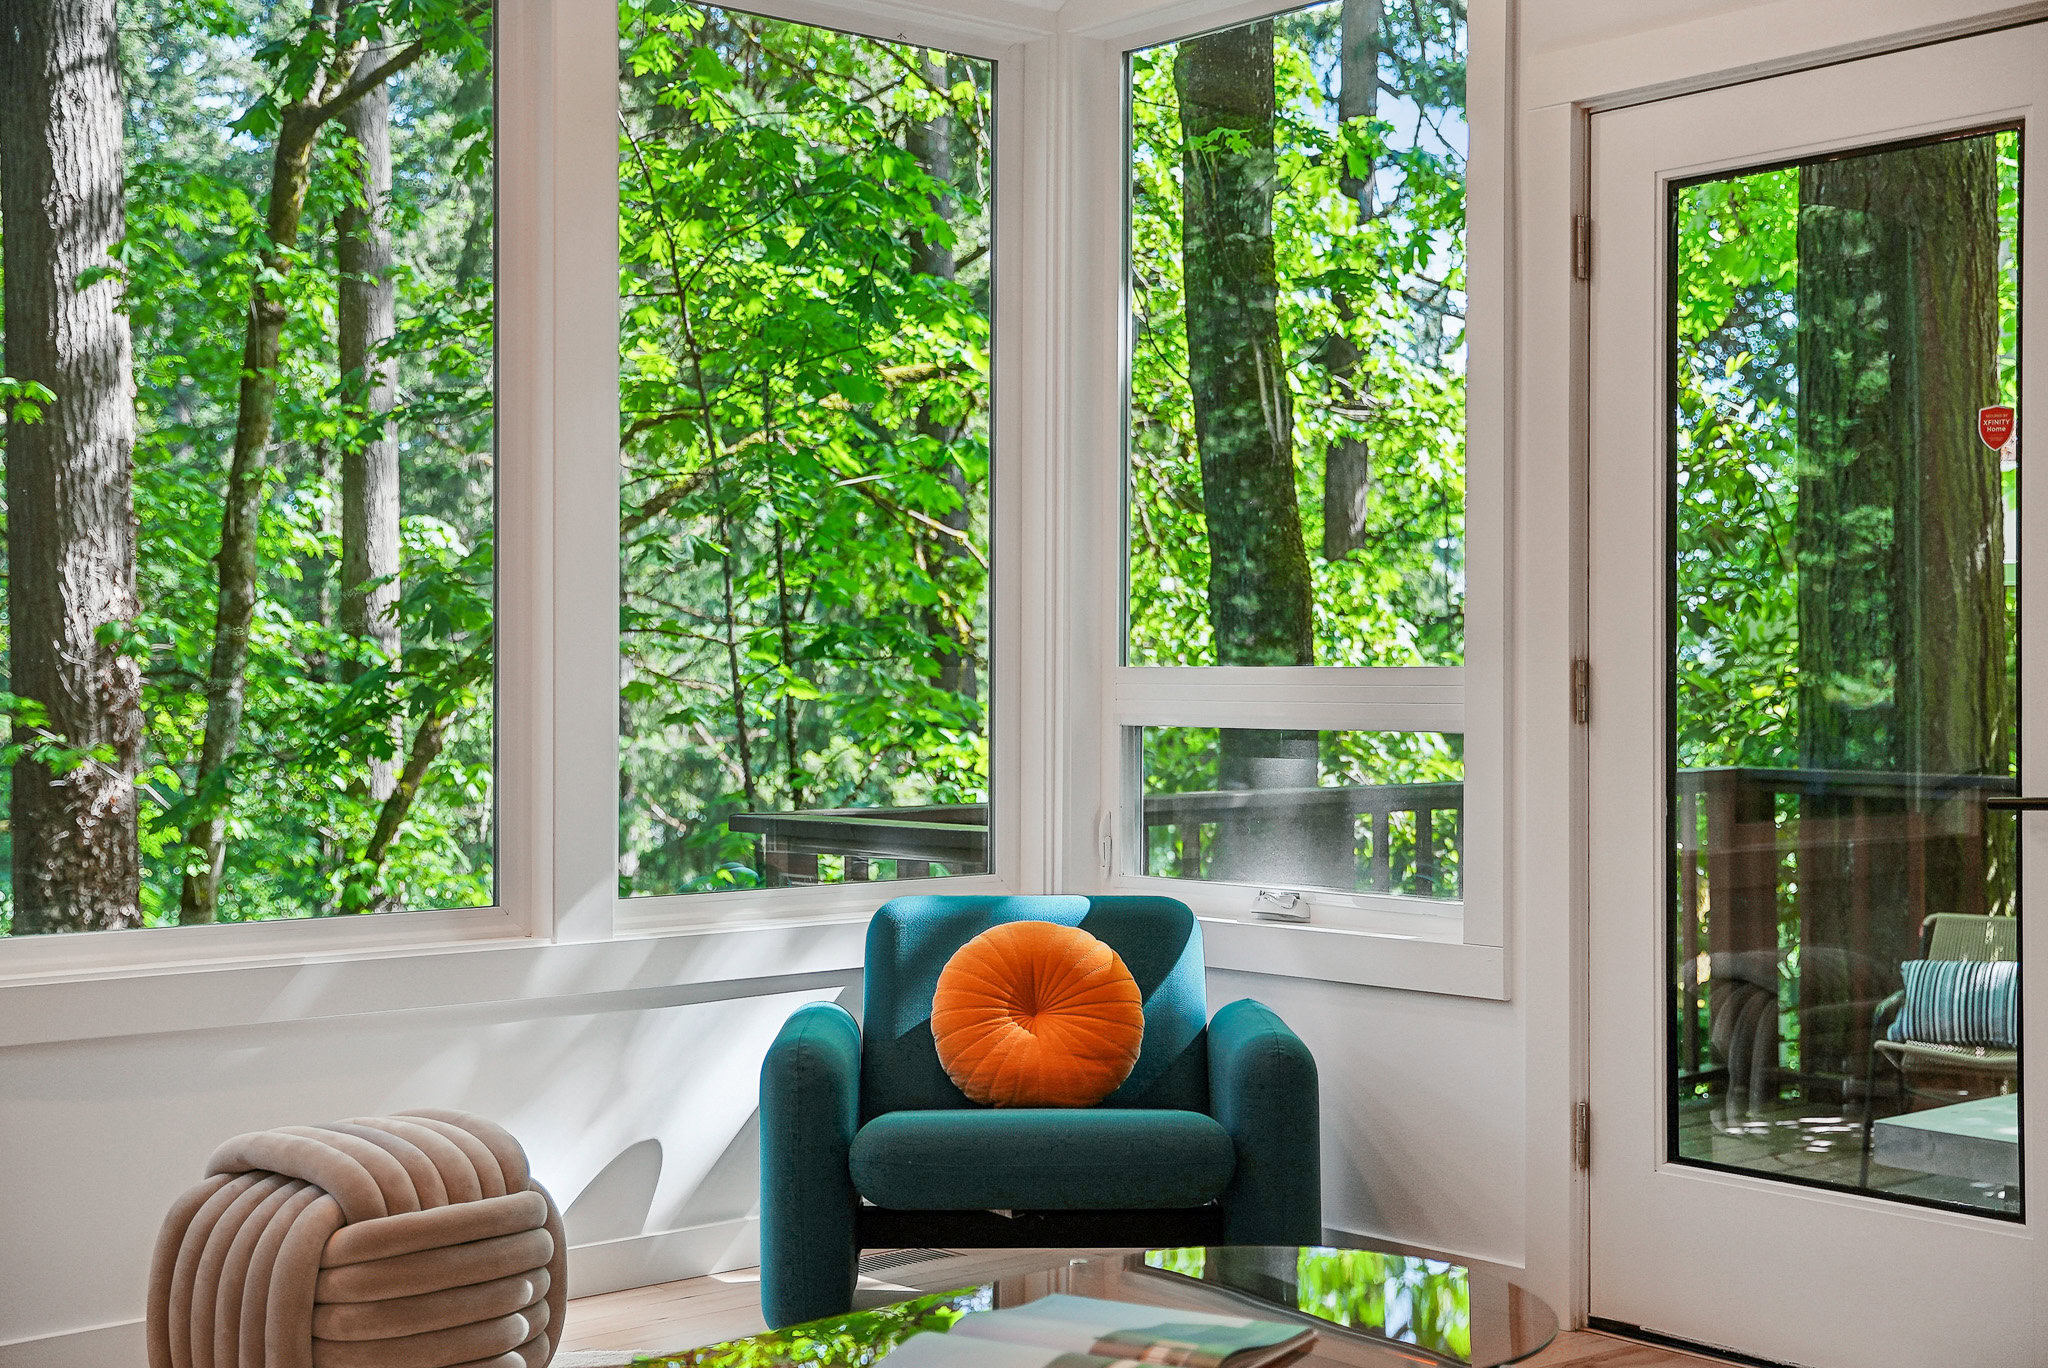 Introducing MIDORI – Lush, Verdant Tree House in NW Portland